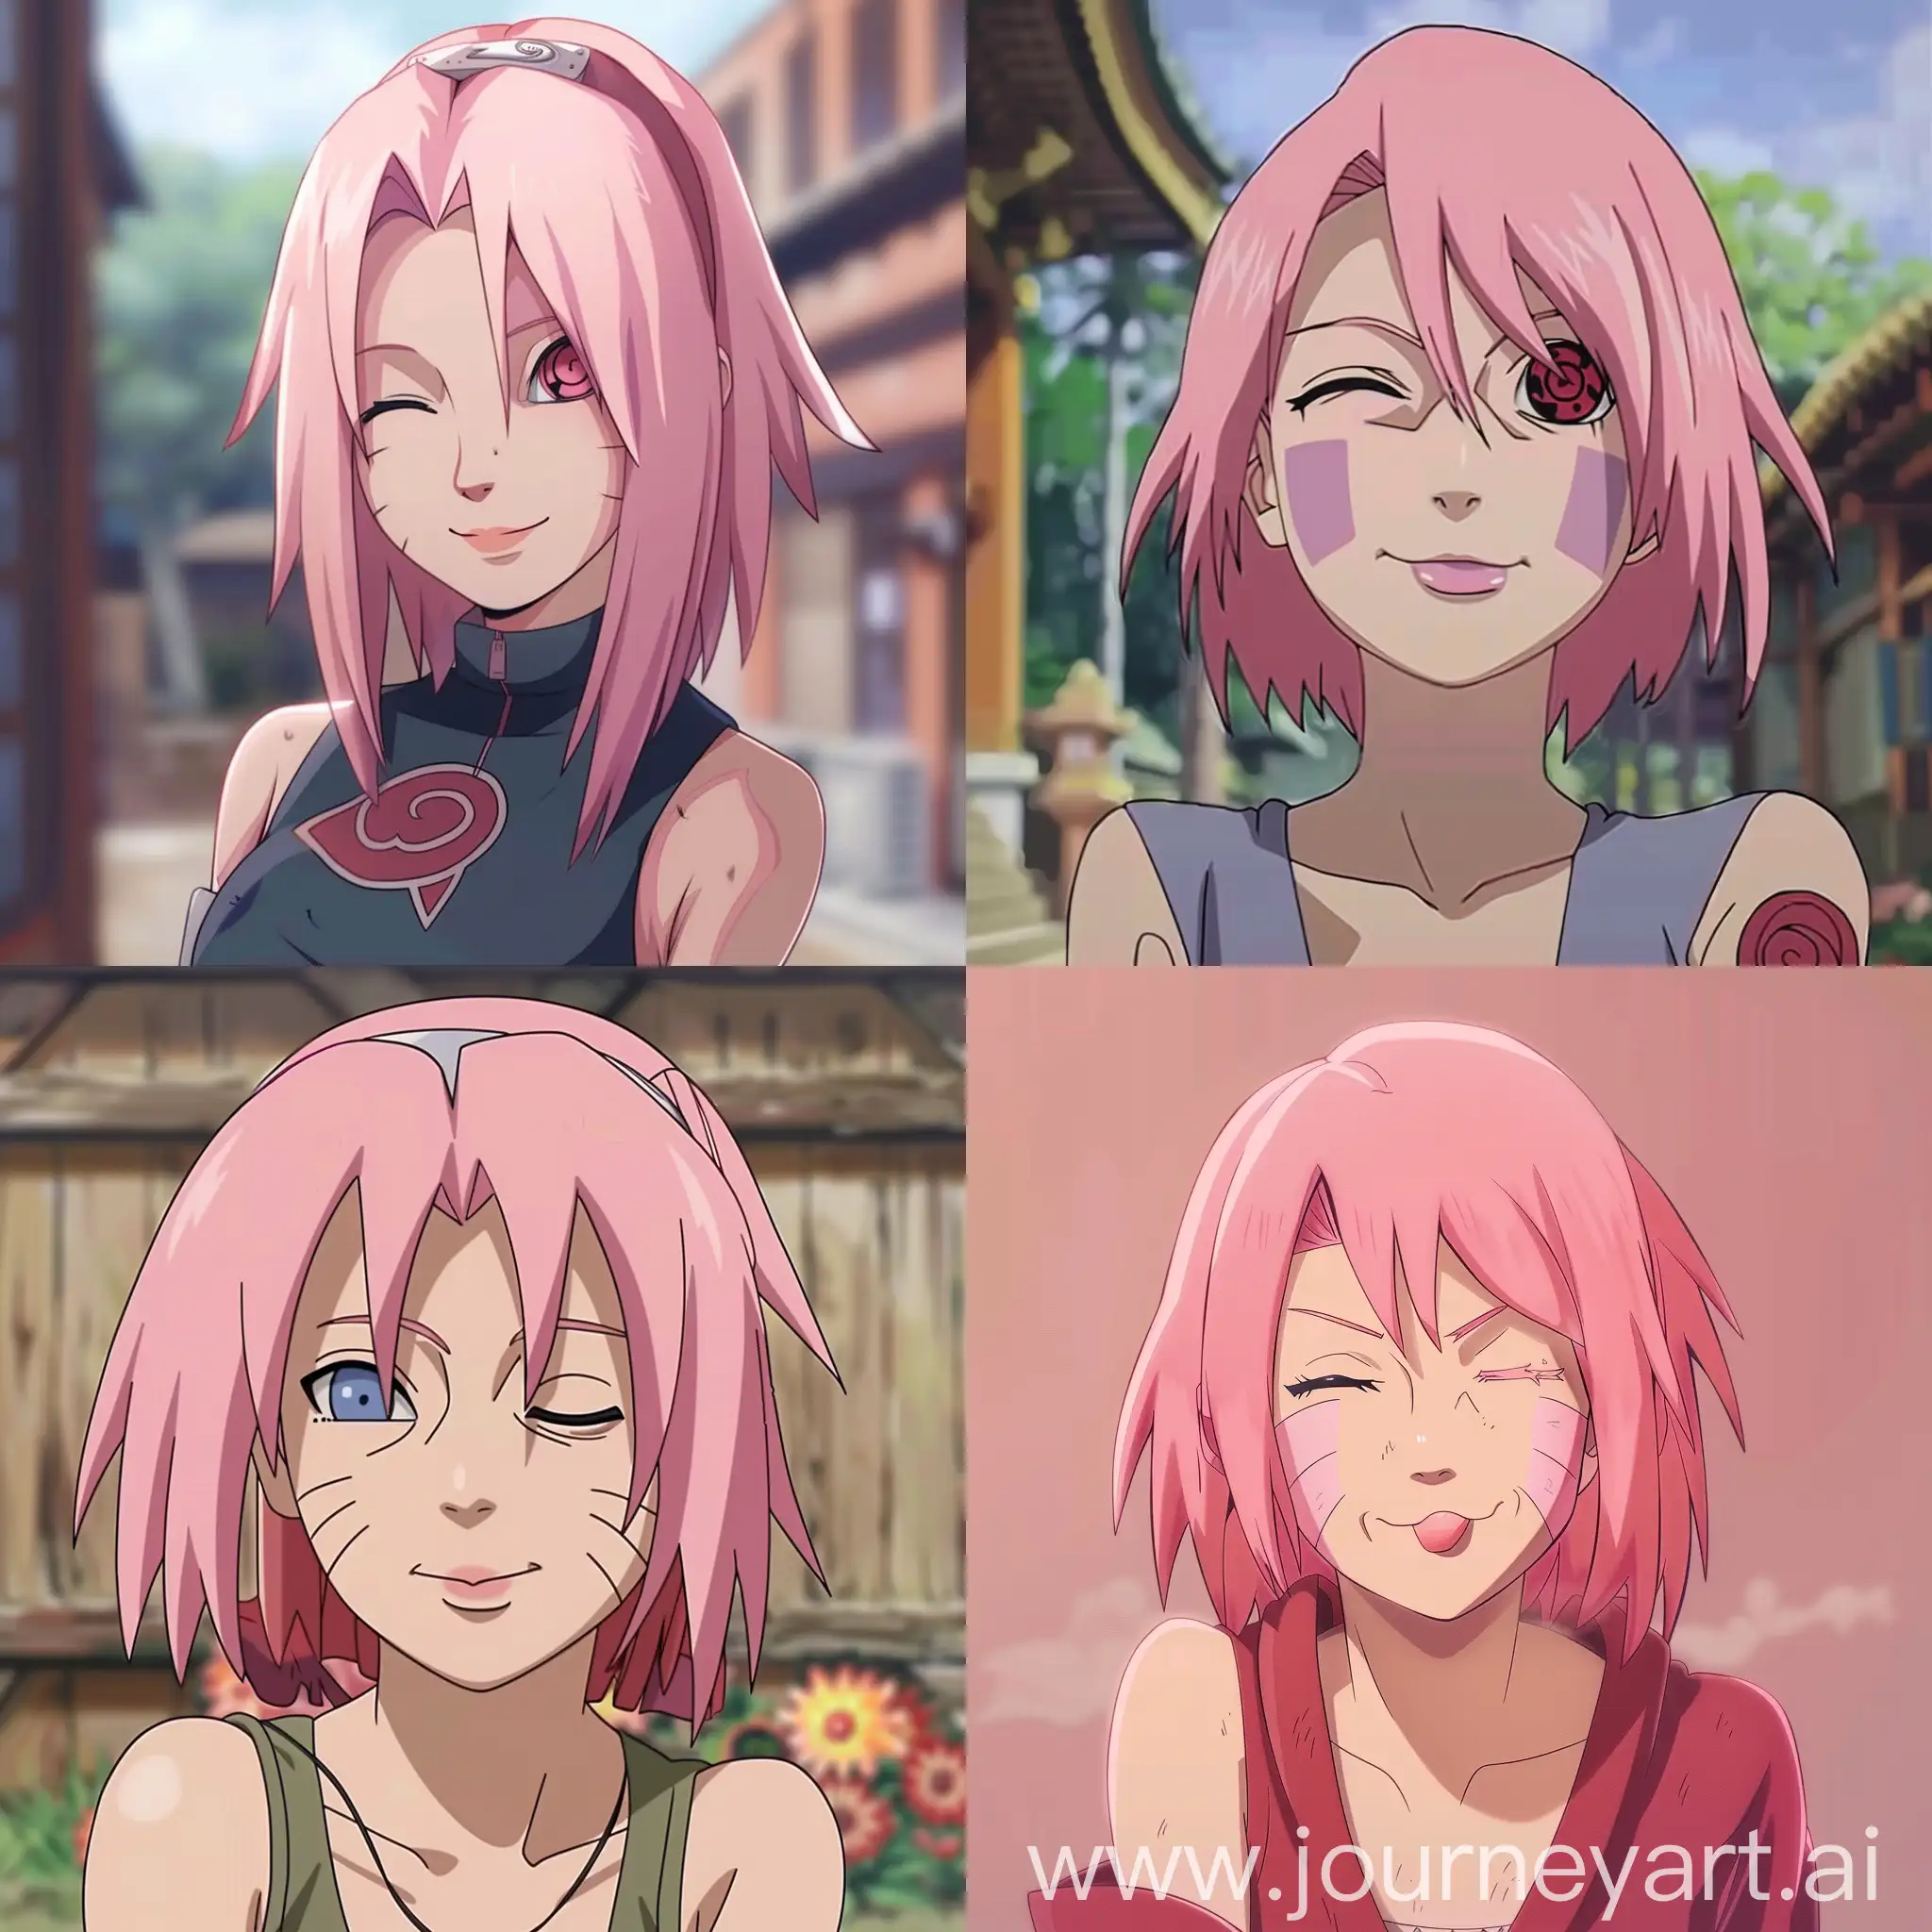 Cute-Sakura-Haruno-Winking-Iconic-Anime-Character-in-Playful-Pose